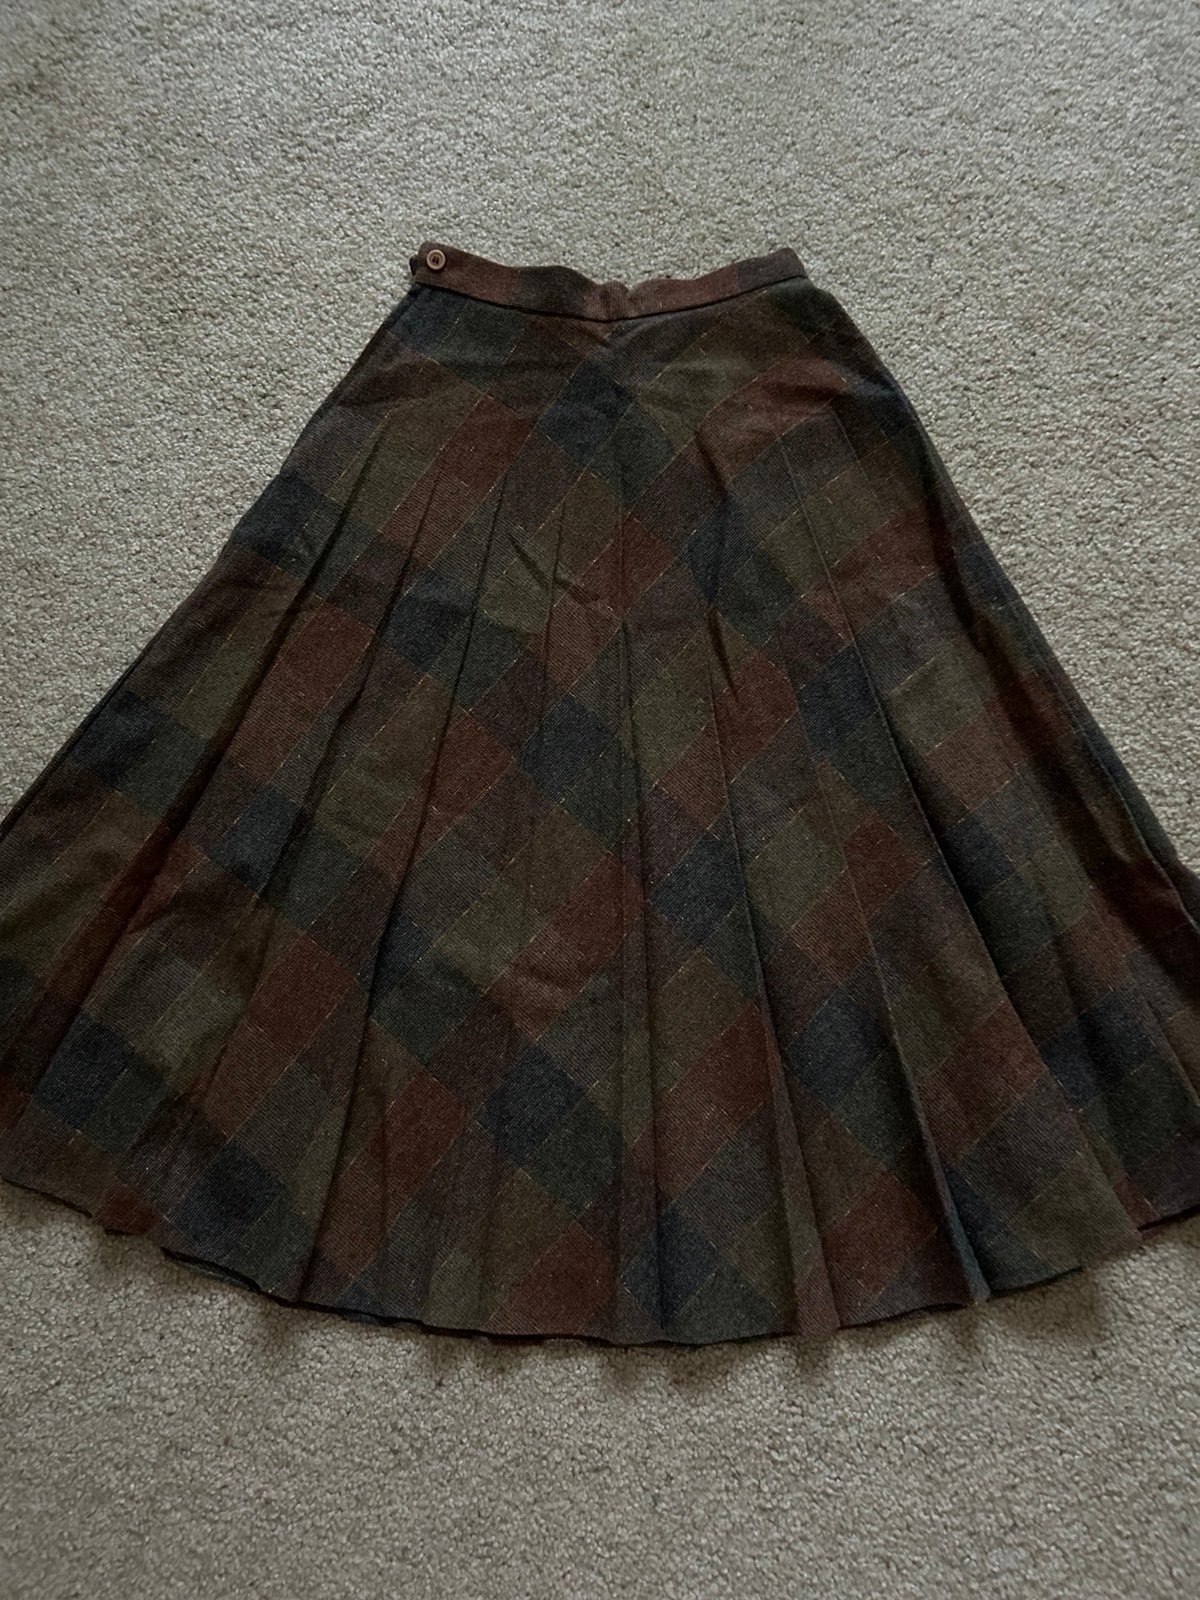 Discounted Skirt OzZCWvHO1 High Quaity